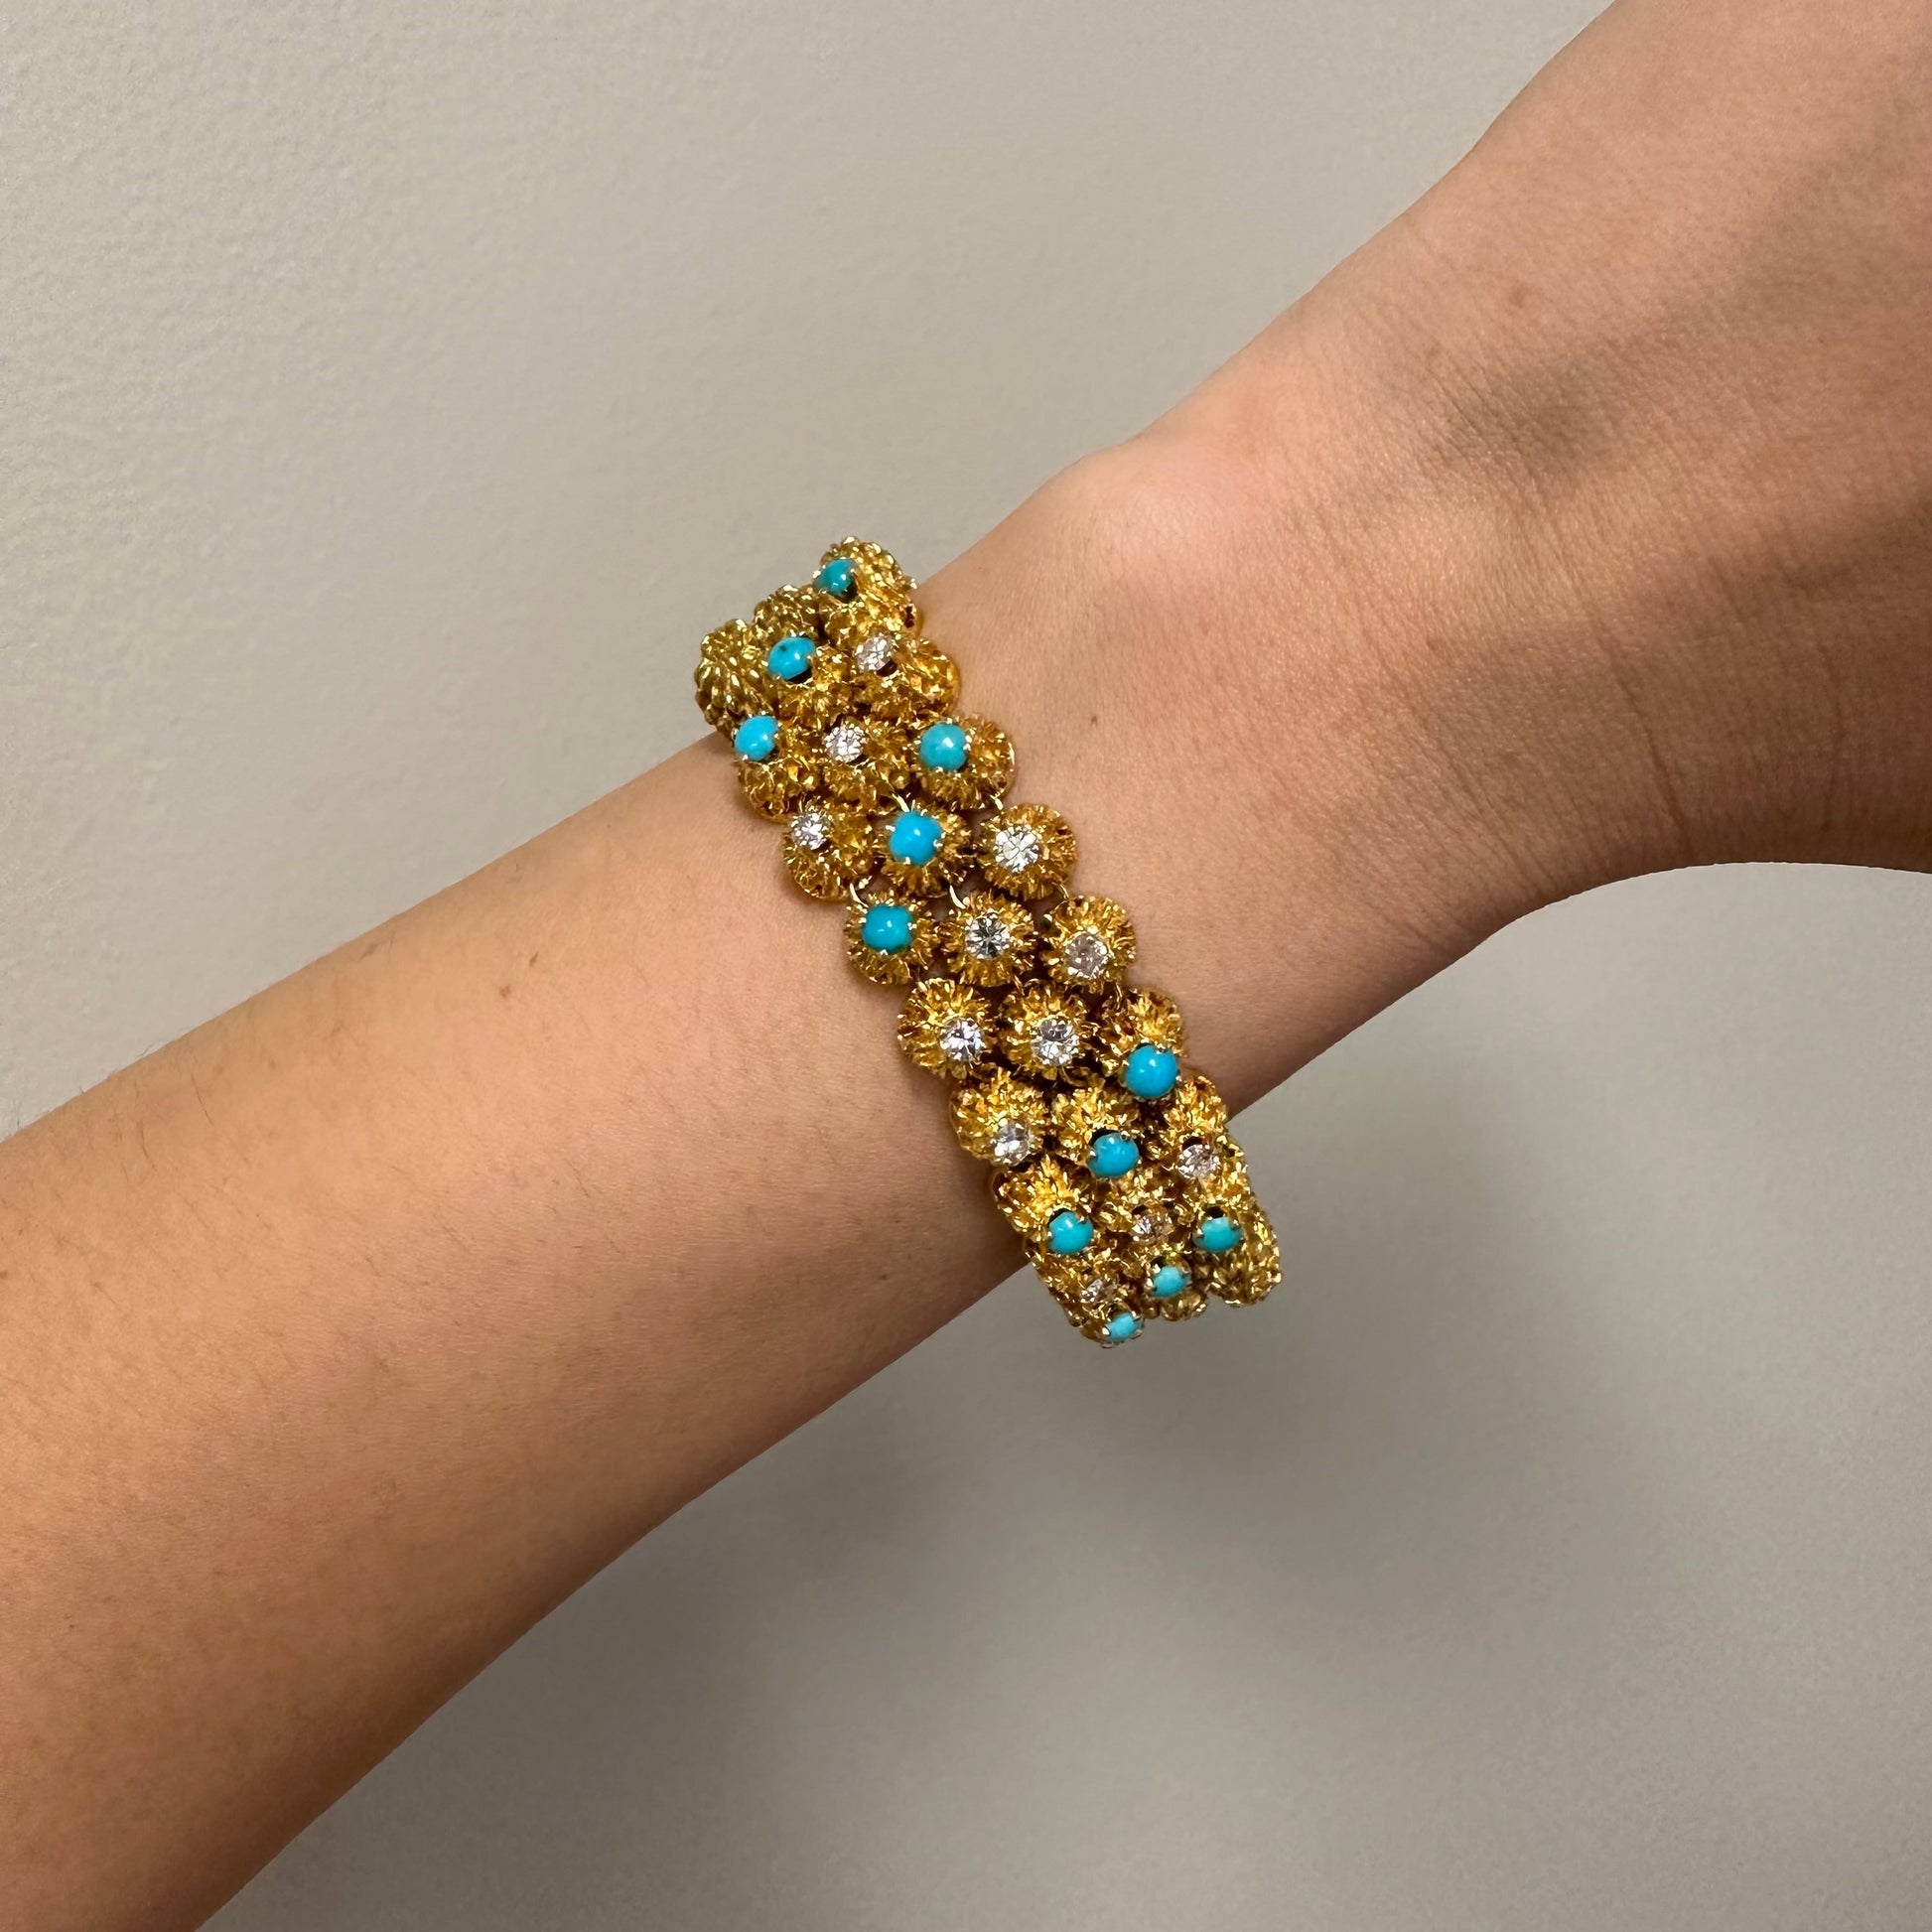 1970s French 18KT Yellow Gold Diamond & Turquoise Bracelet on wrist